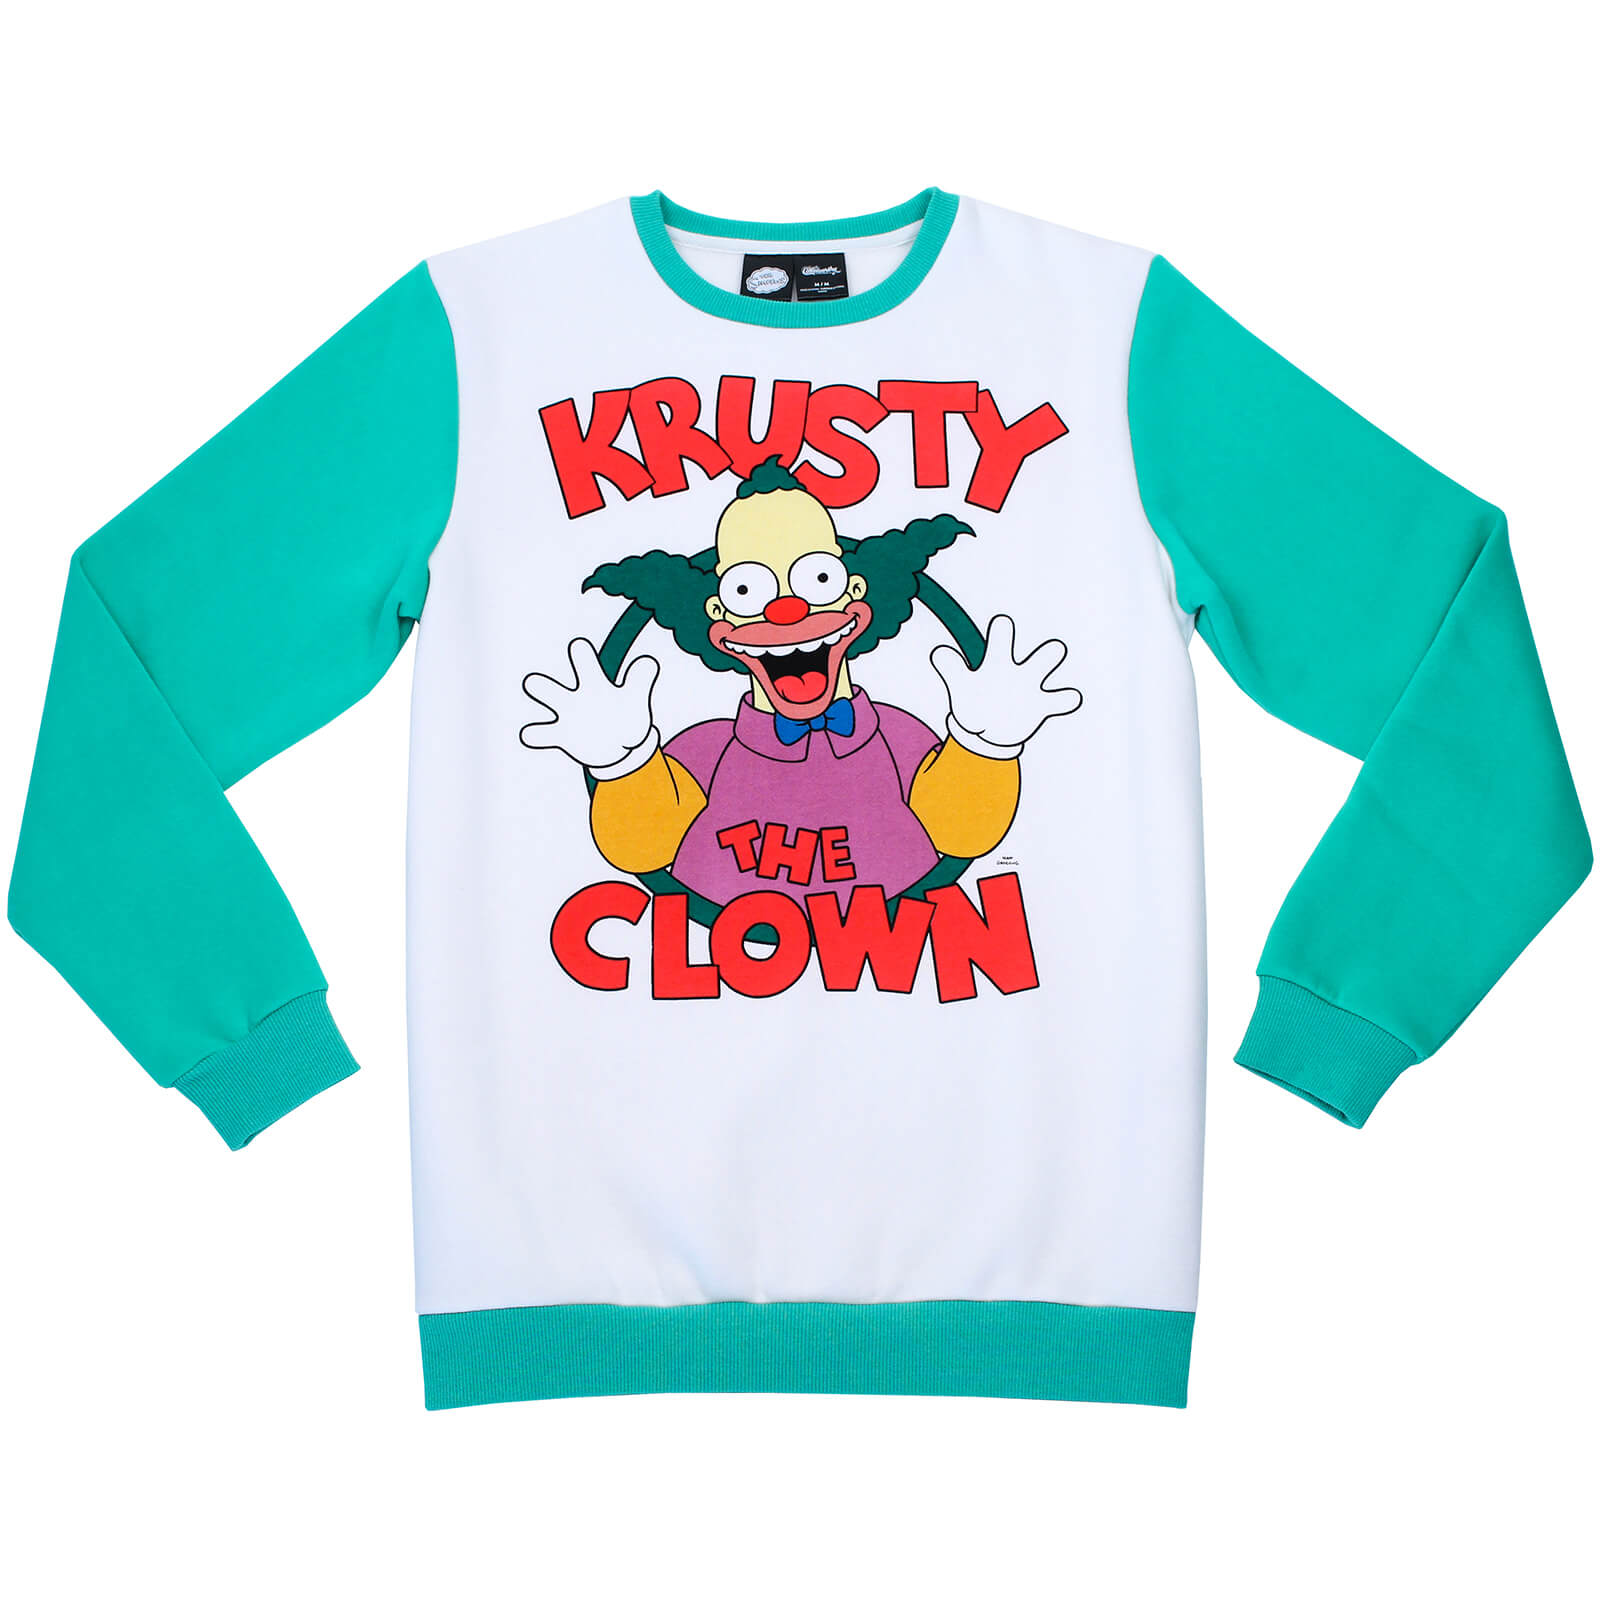 Cakeworthy x The Simpsons - Krusty The Clown Crewneck Sweatshirt - S